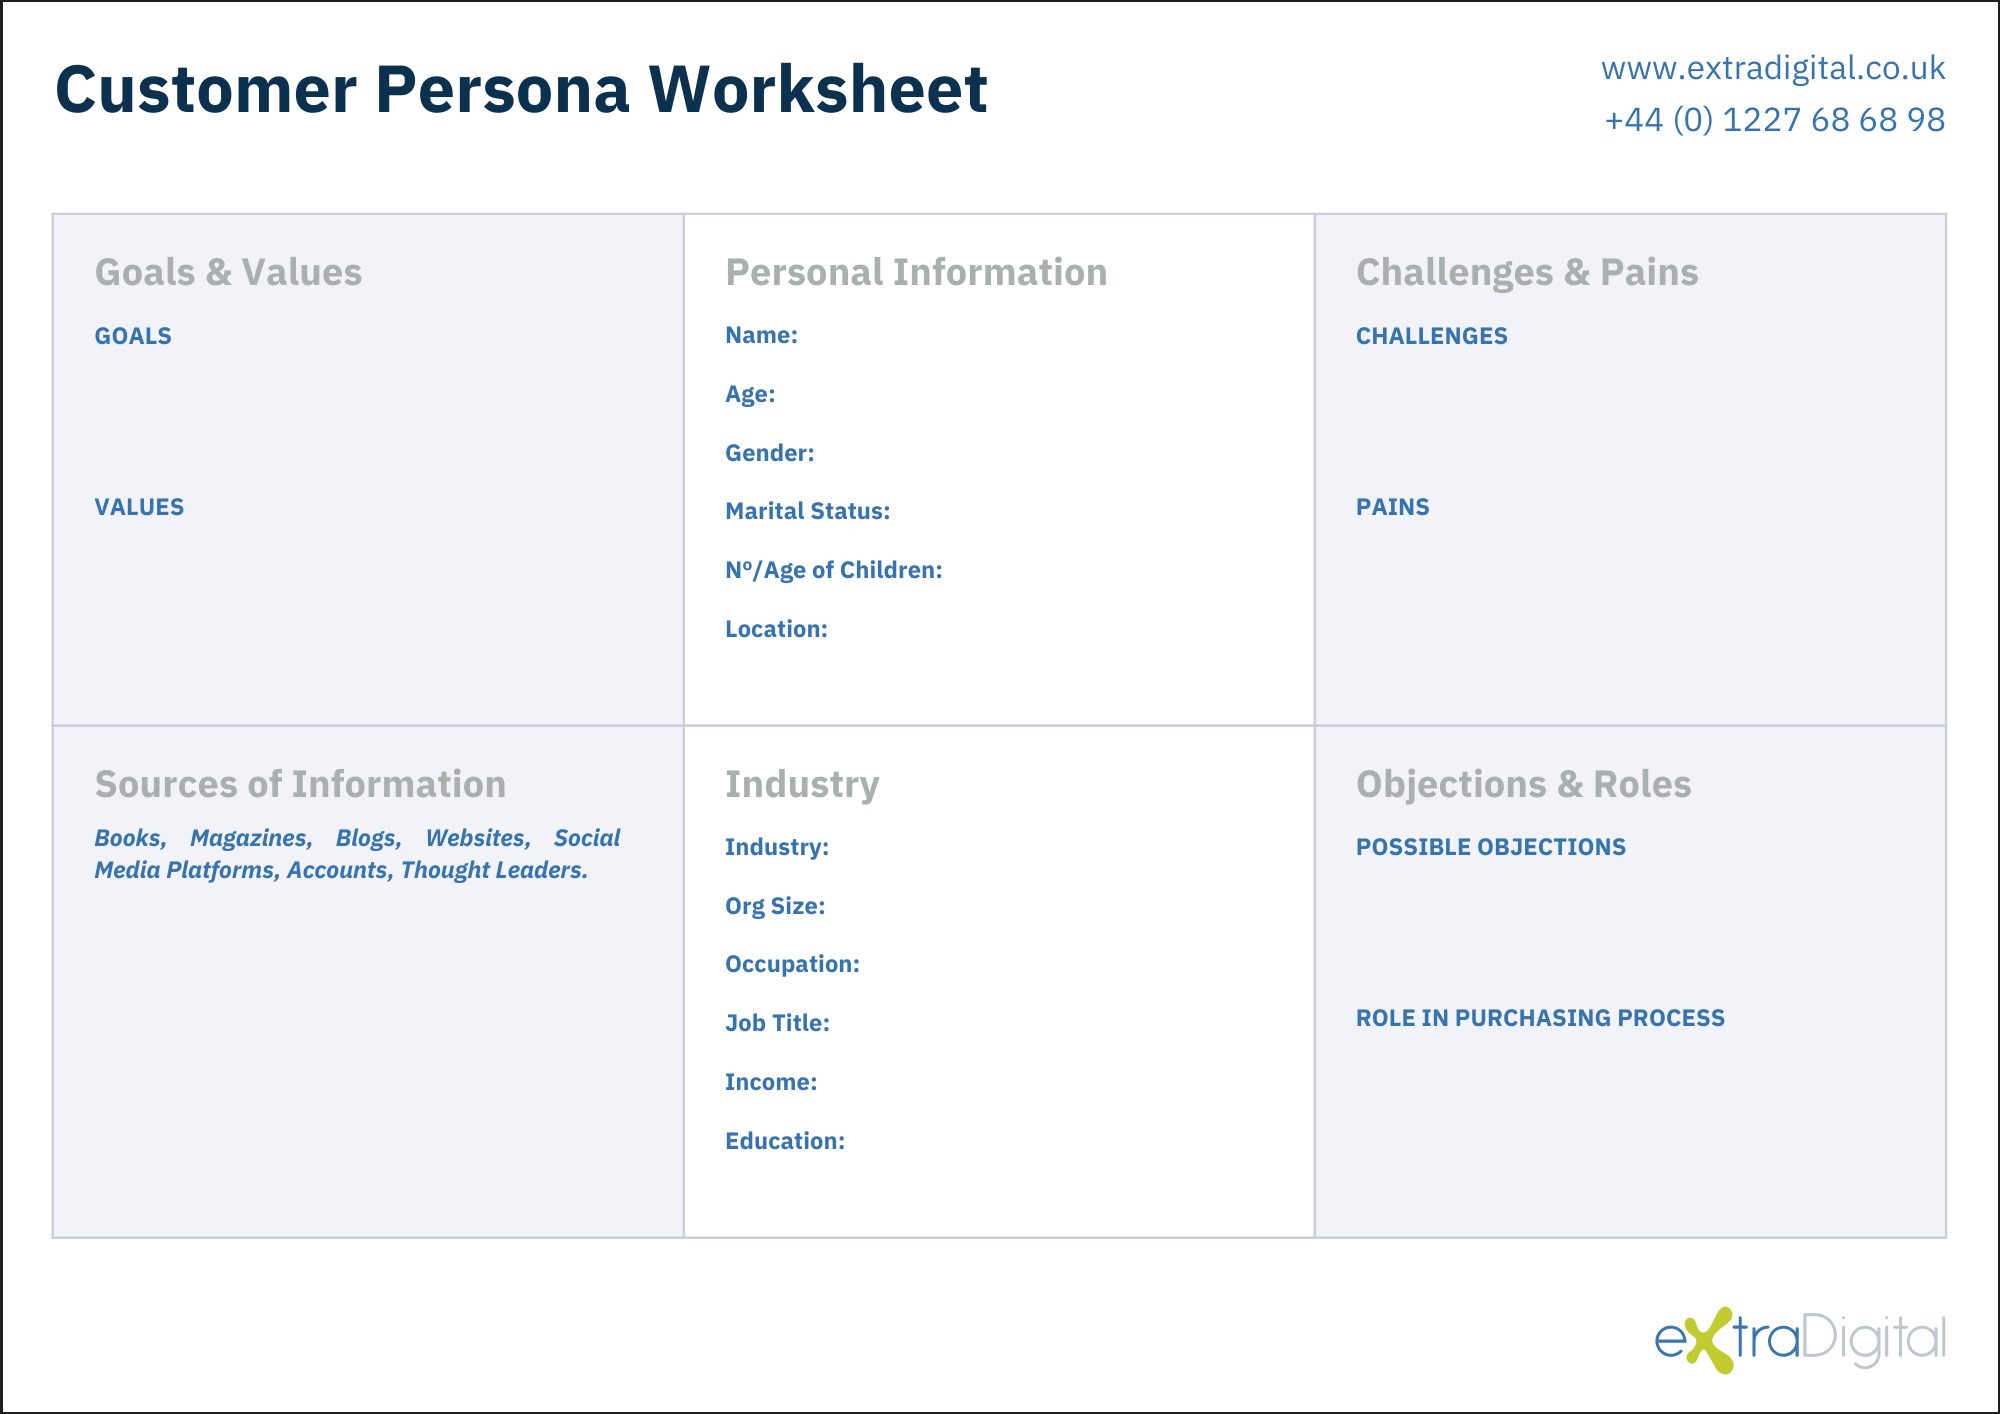 Customer persona worksheet download